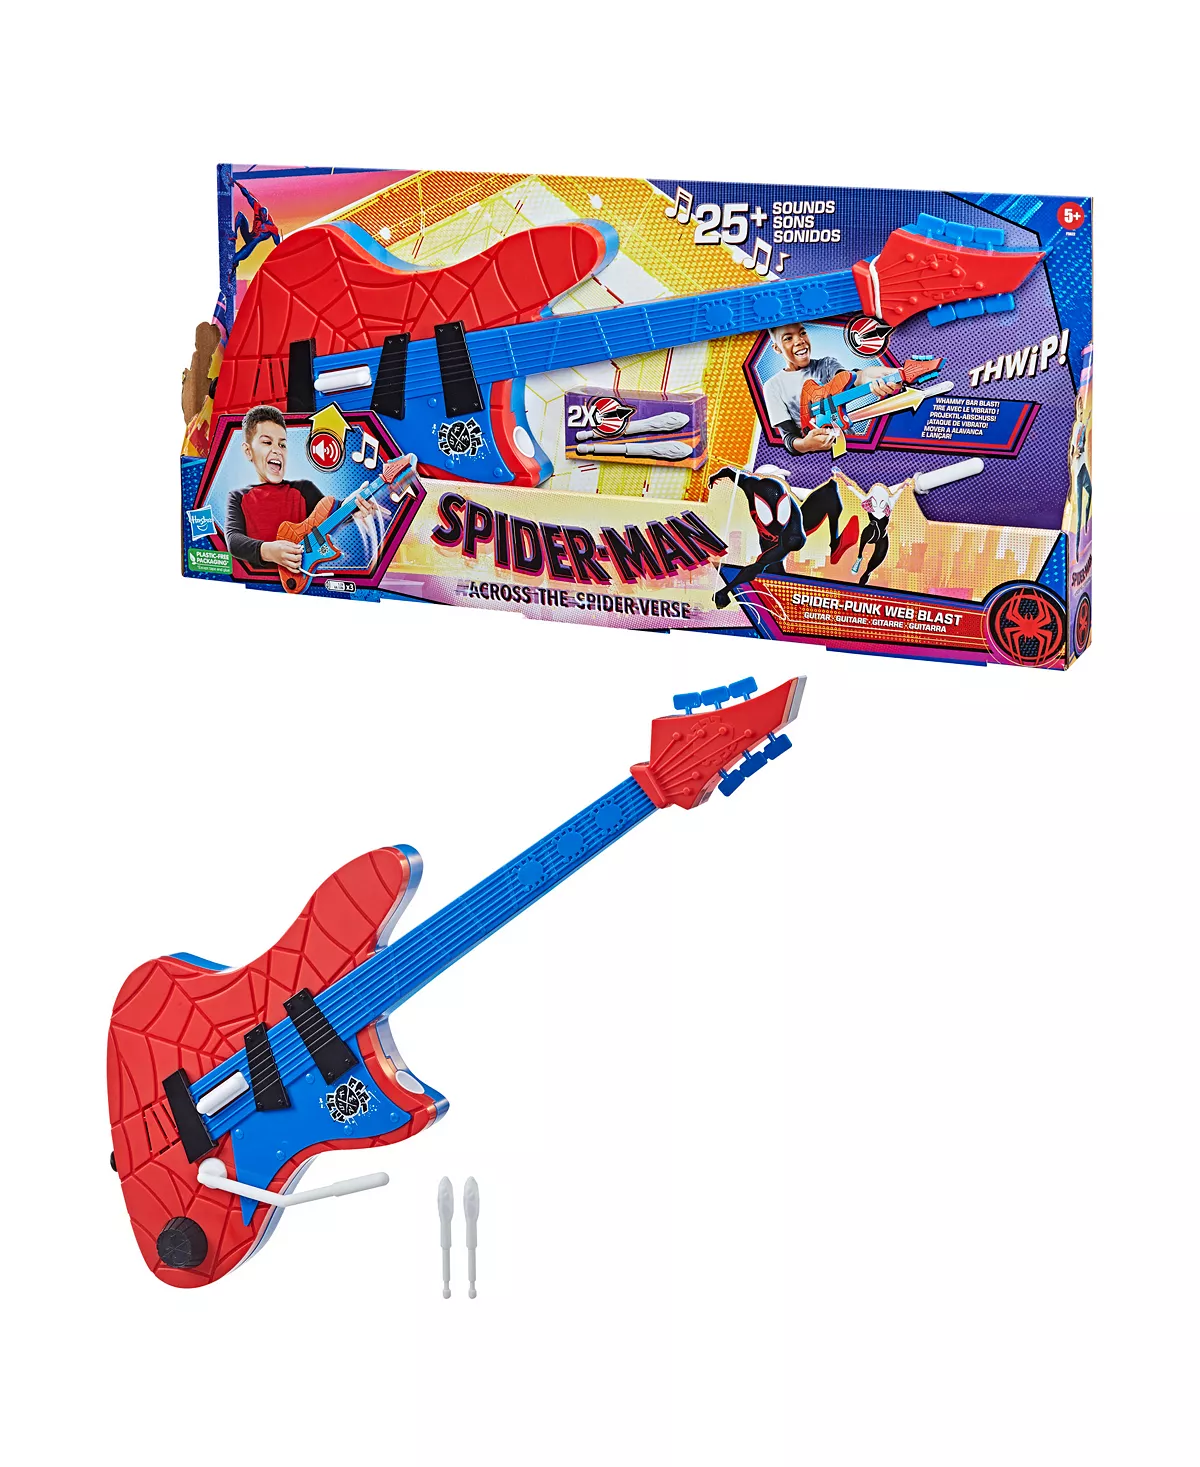 Hasbro Spider Man Across The Spider Verse Spider-Punk Guitar